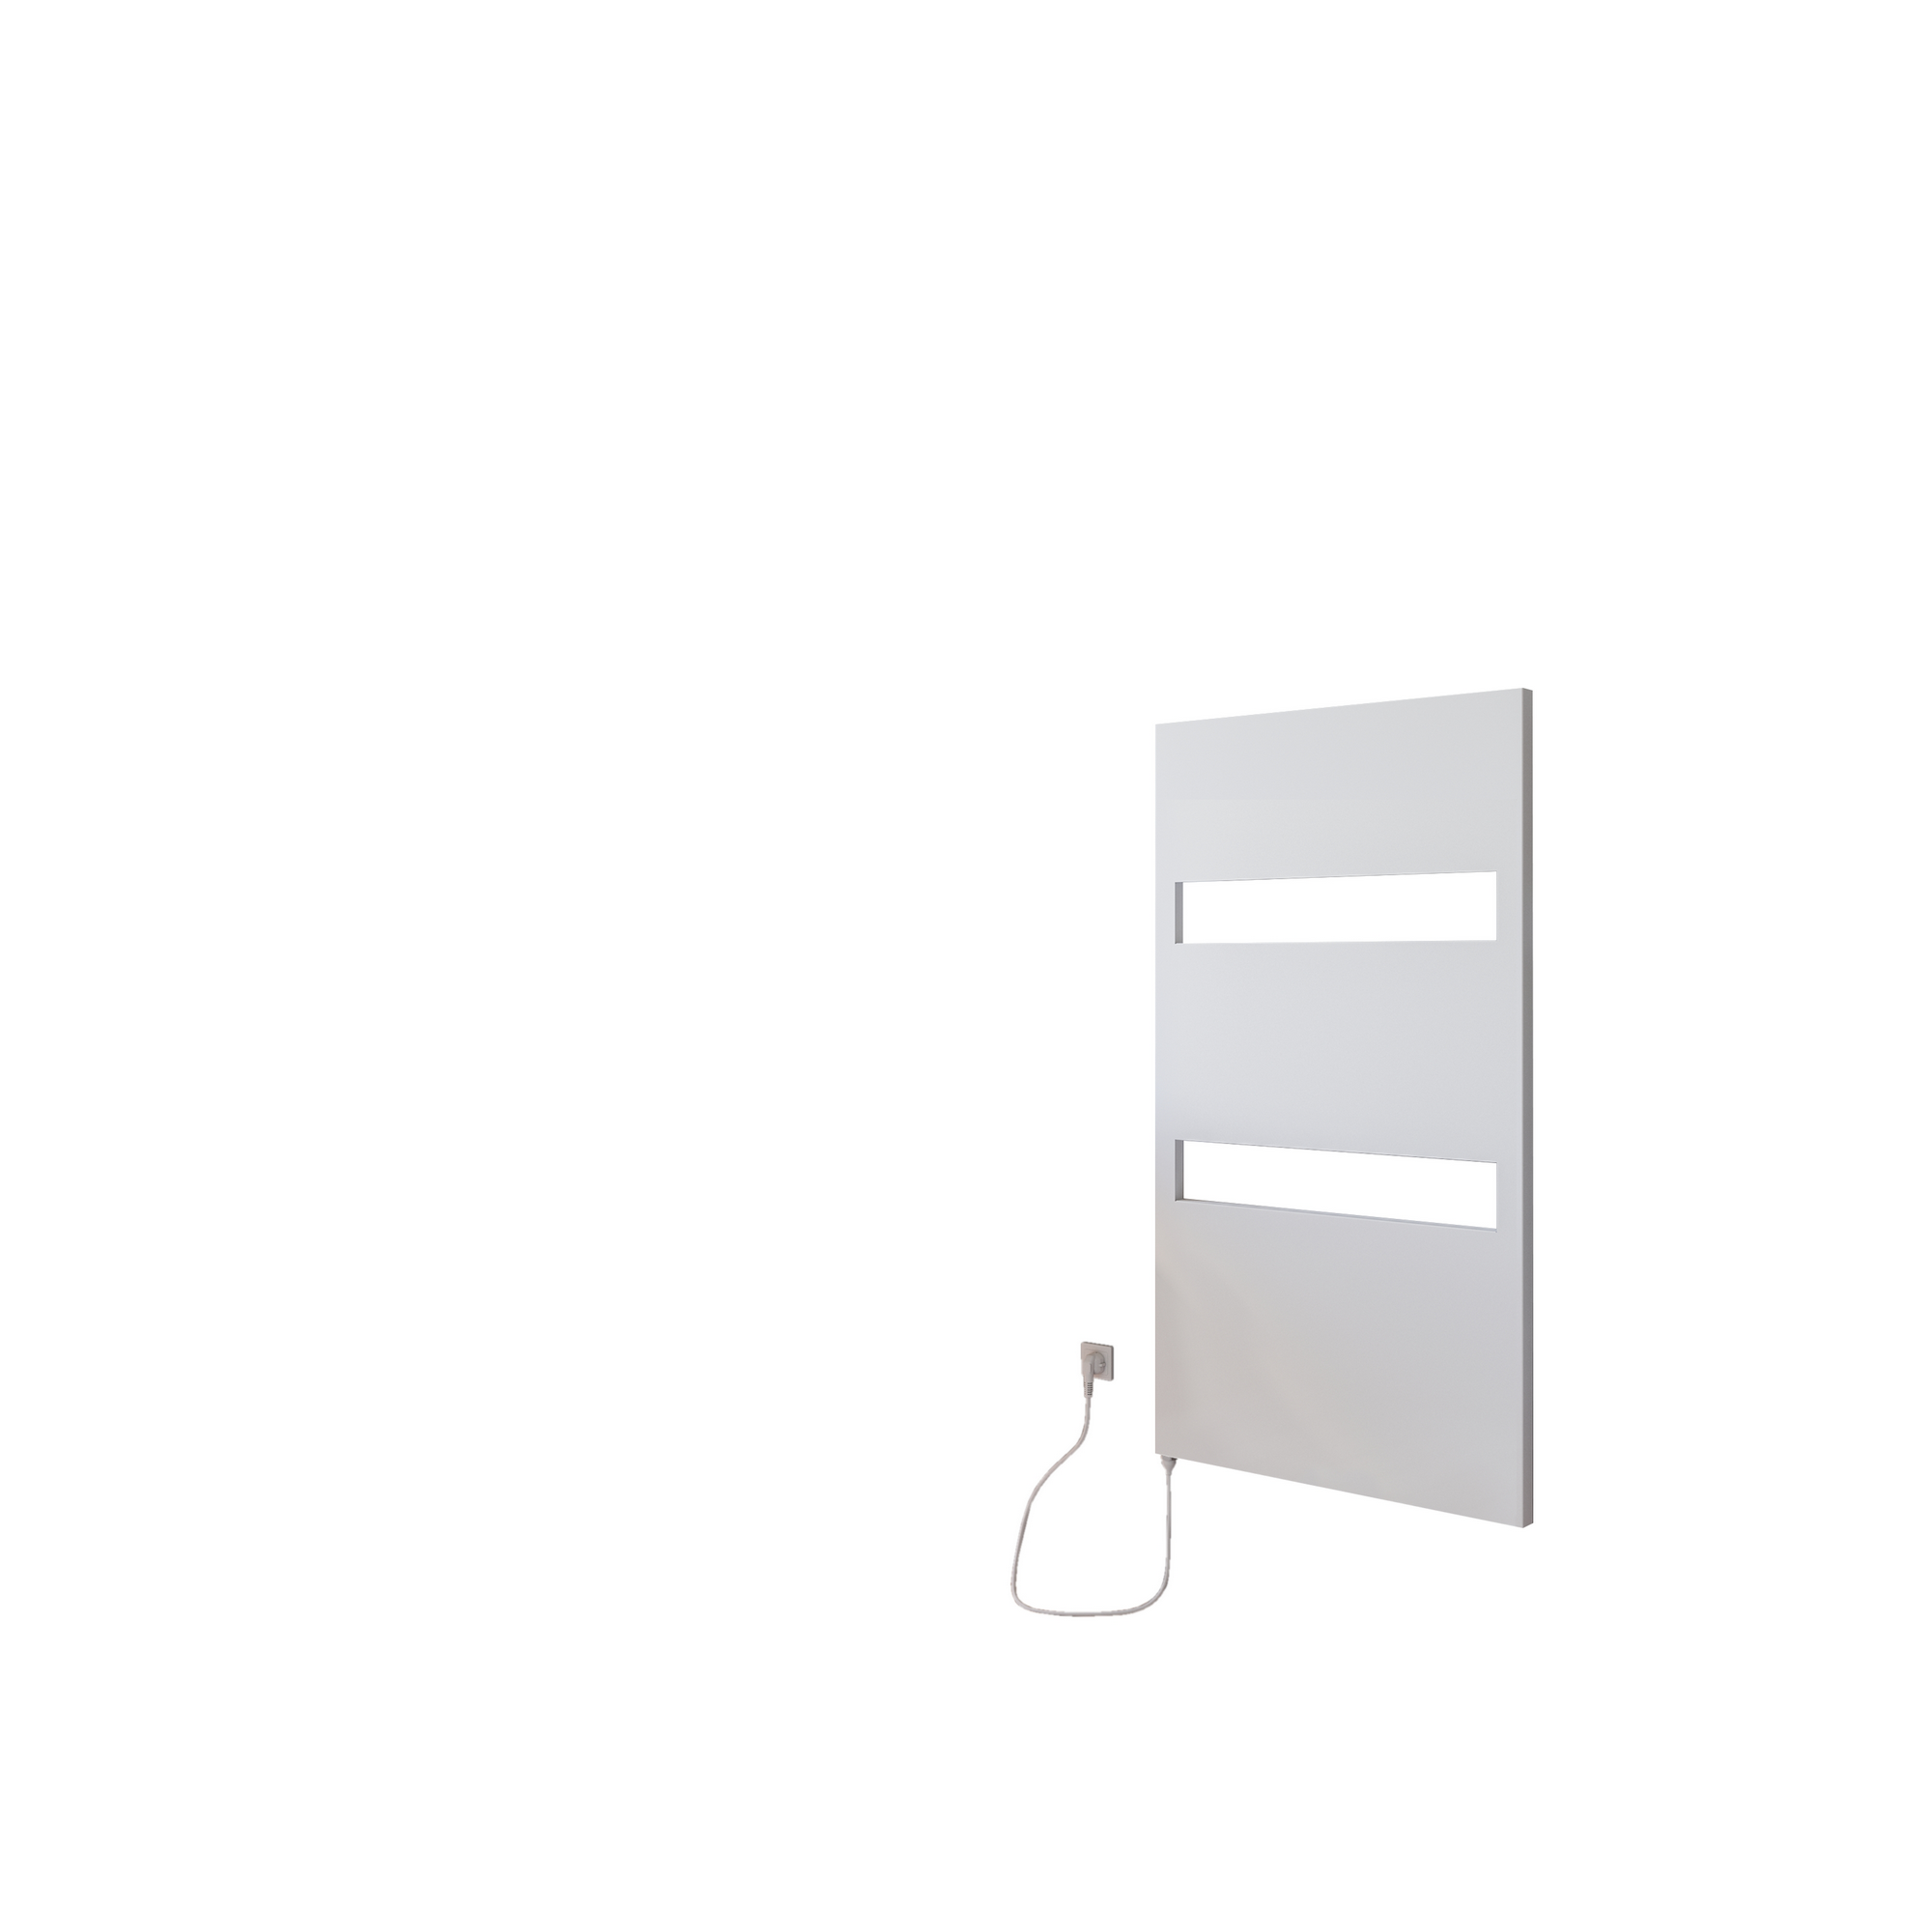 Badheizkörper 'Turin' weiß 114,3 x 60,5 cm, Anschluss links + product video